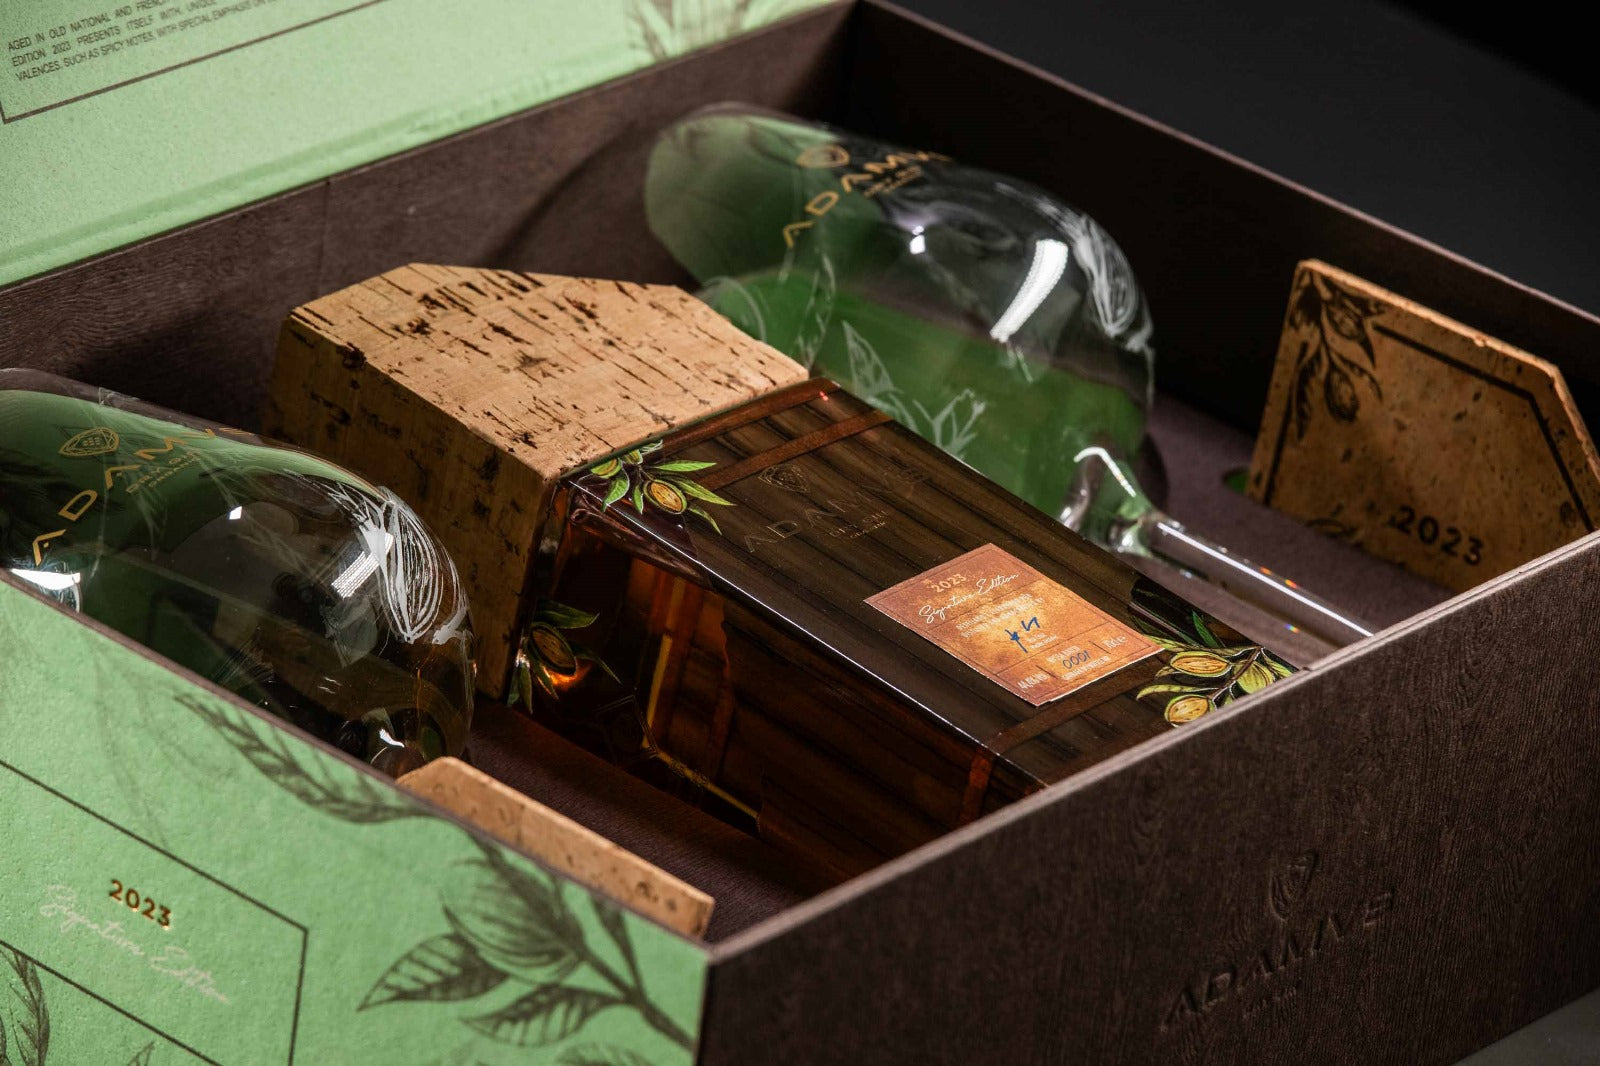 Adamus Organic Dry Gin Signature Edition 2023 70cl Gift Box Personalisiert 